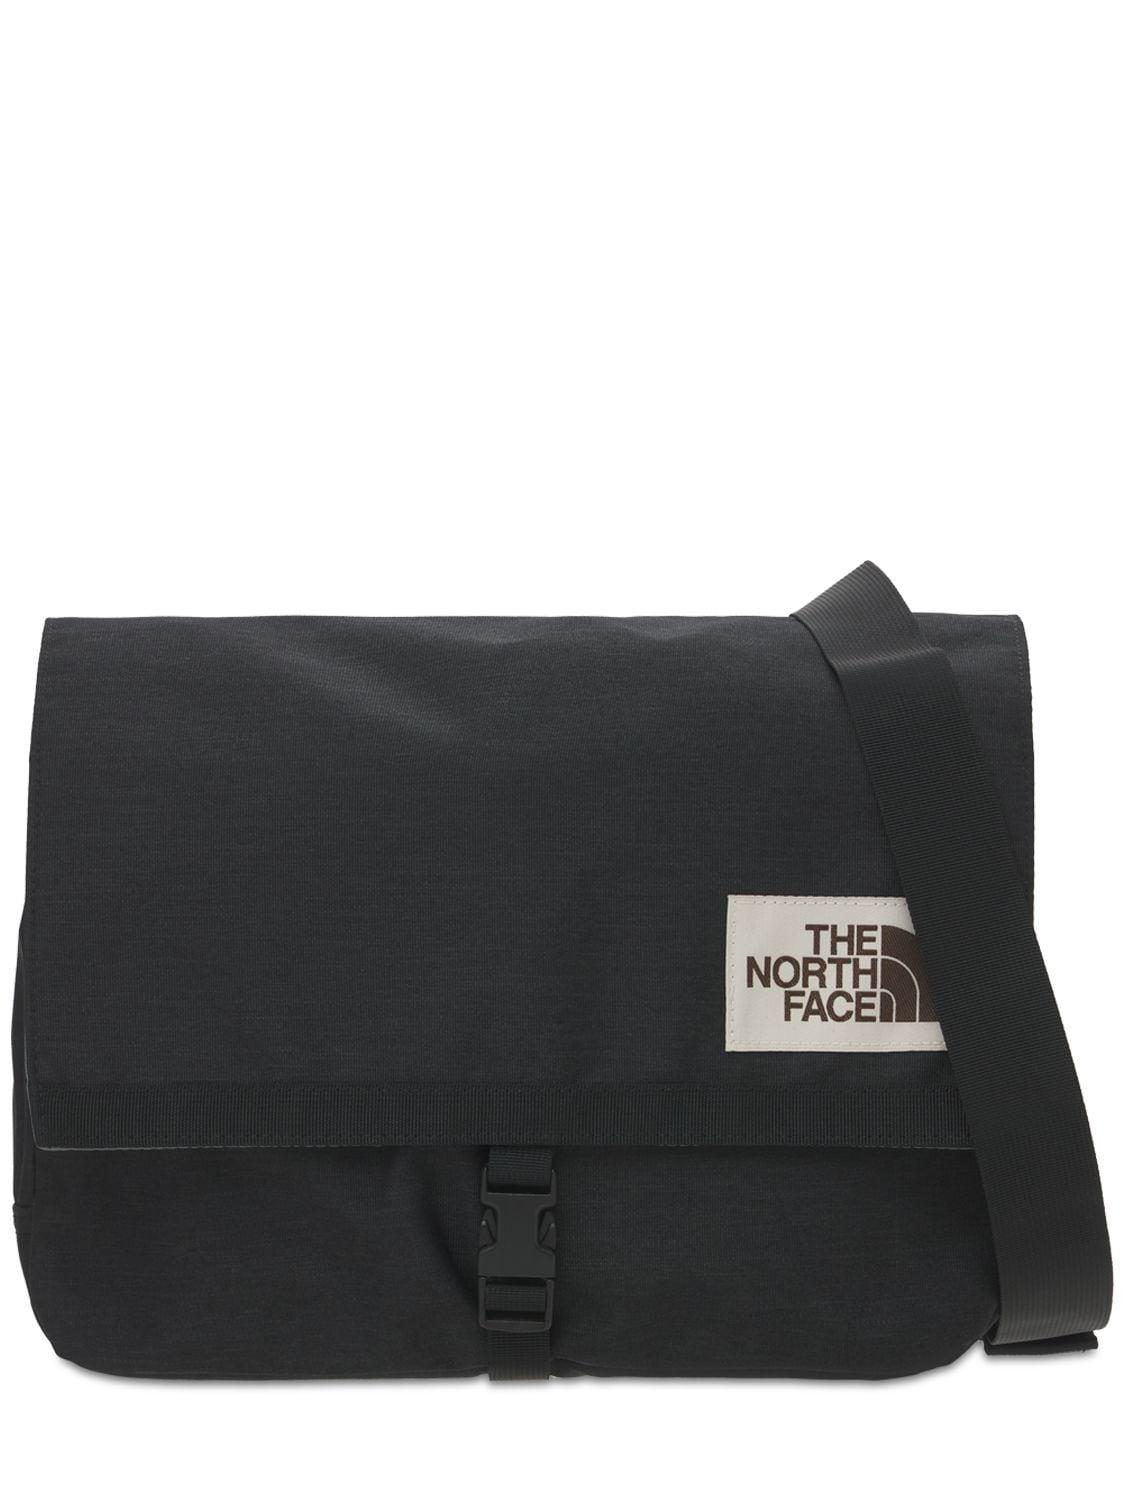 The North Face Berkeley Satchel in Black for Men | Lyst